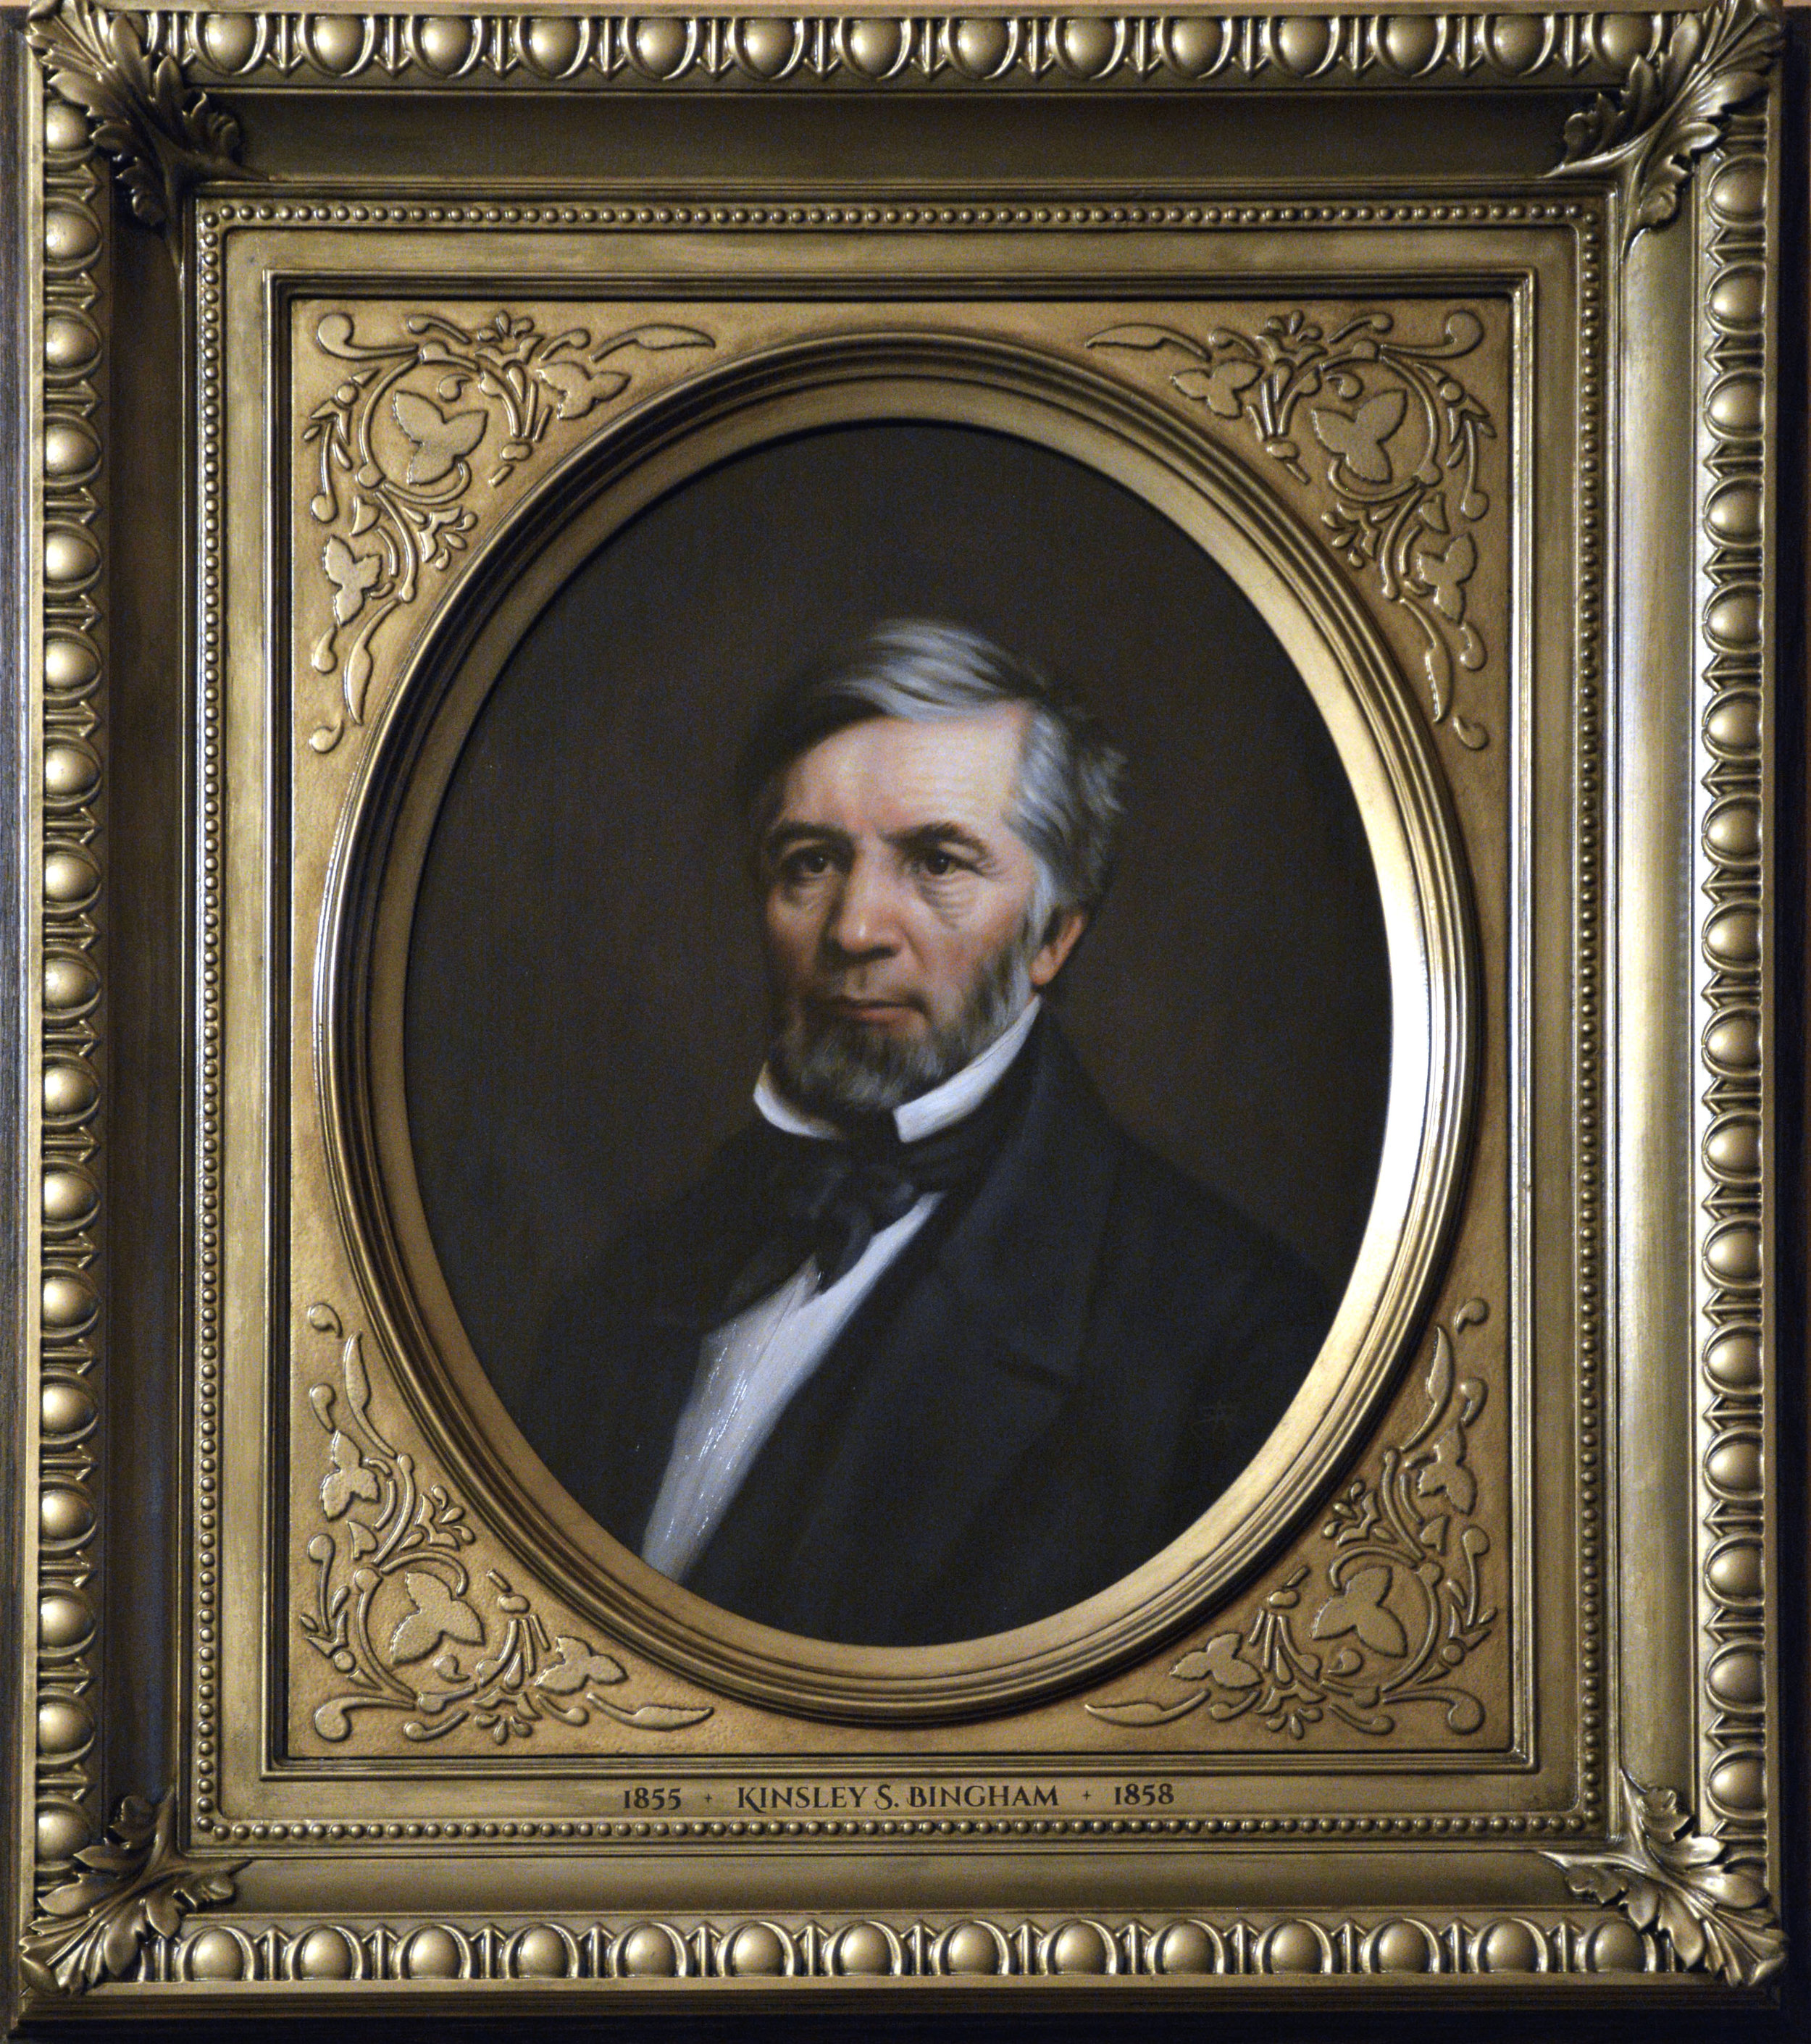 Governor Kinsley S. Bingham, Michigan